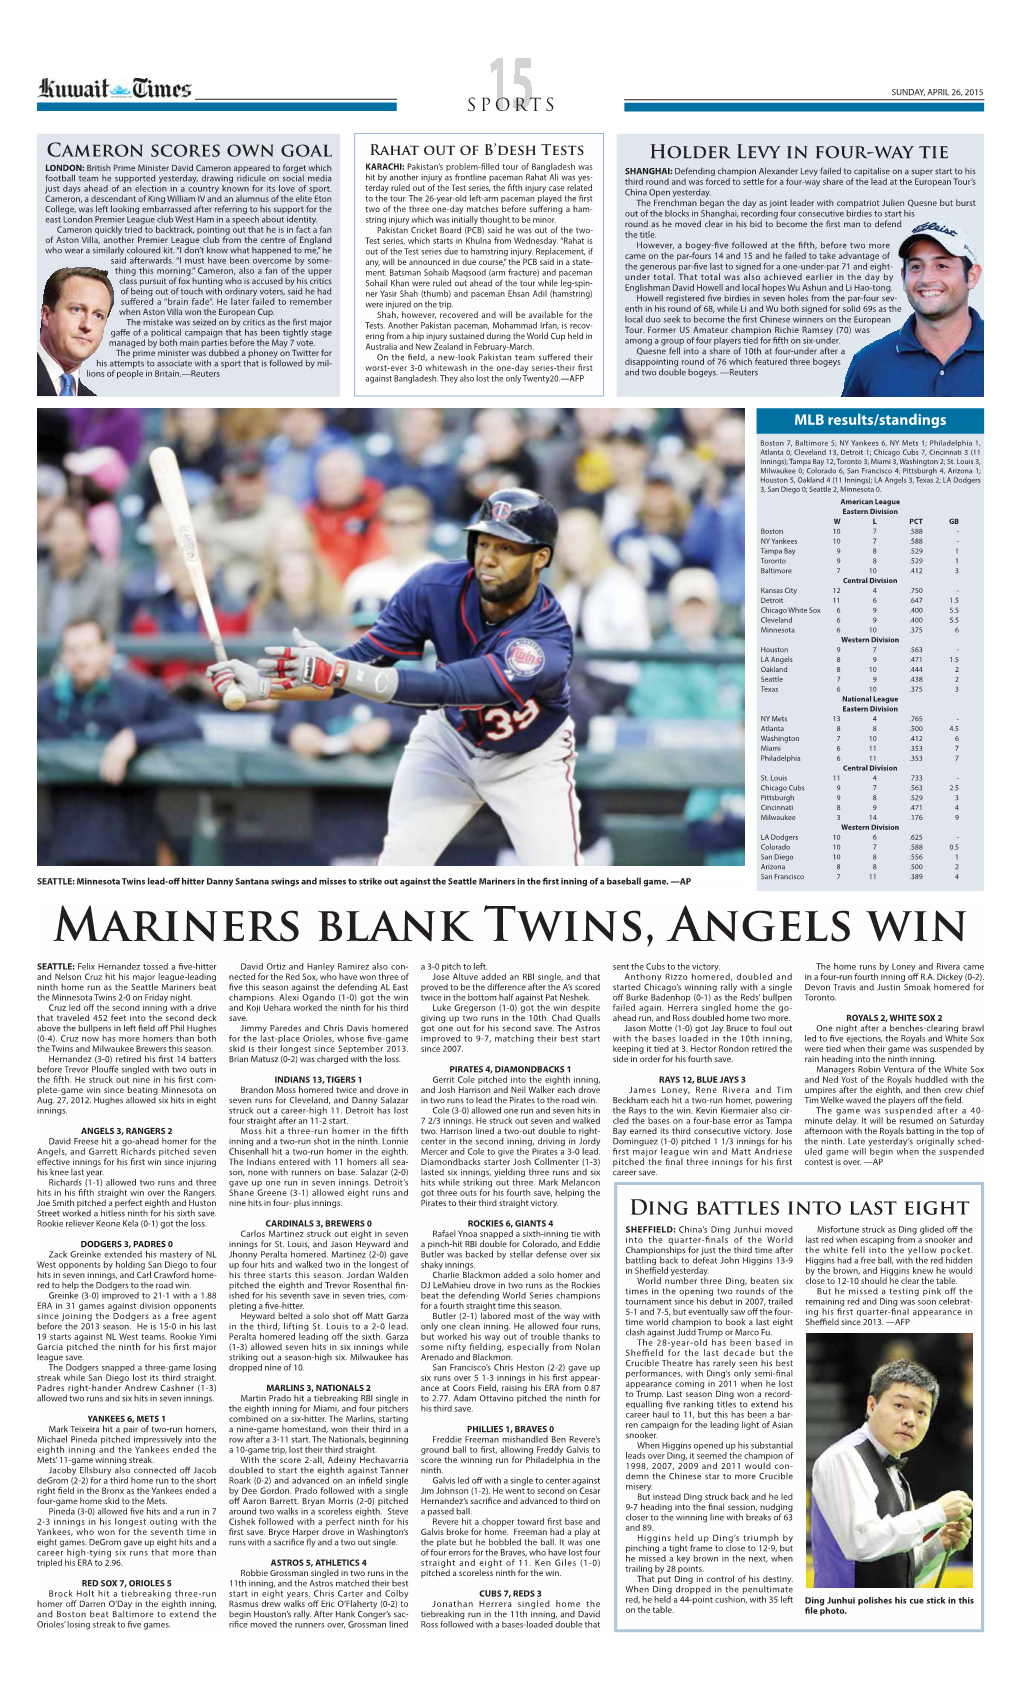 Mariners Blank Twins, Angels Win